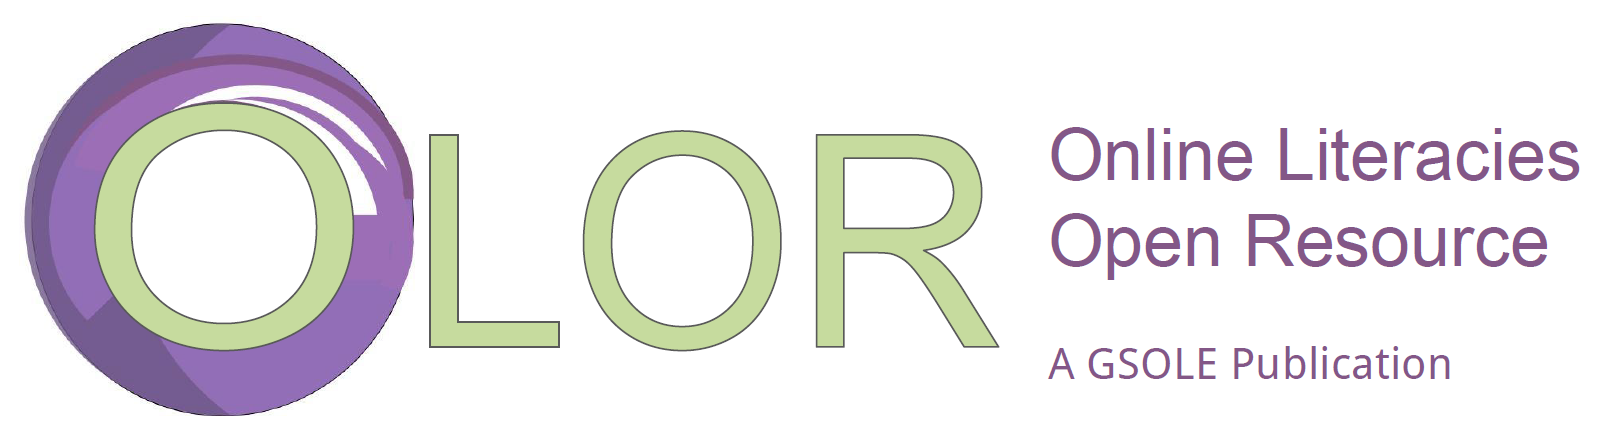 OLOR Logo: "OLOR Online Literacies Open Resource, A GSOLE Publication"